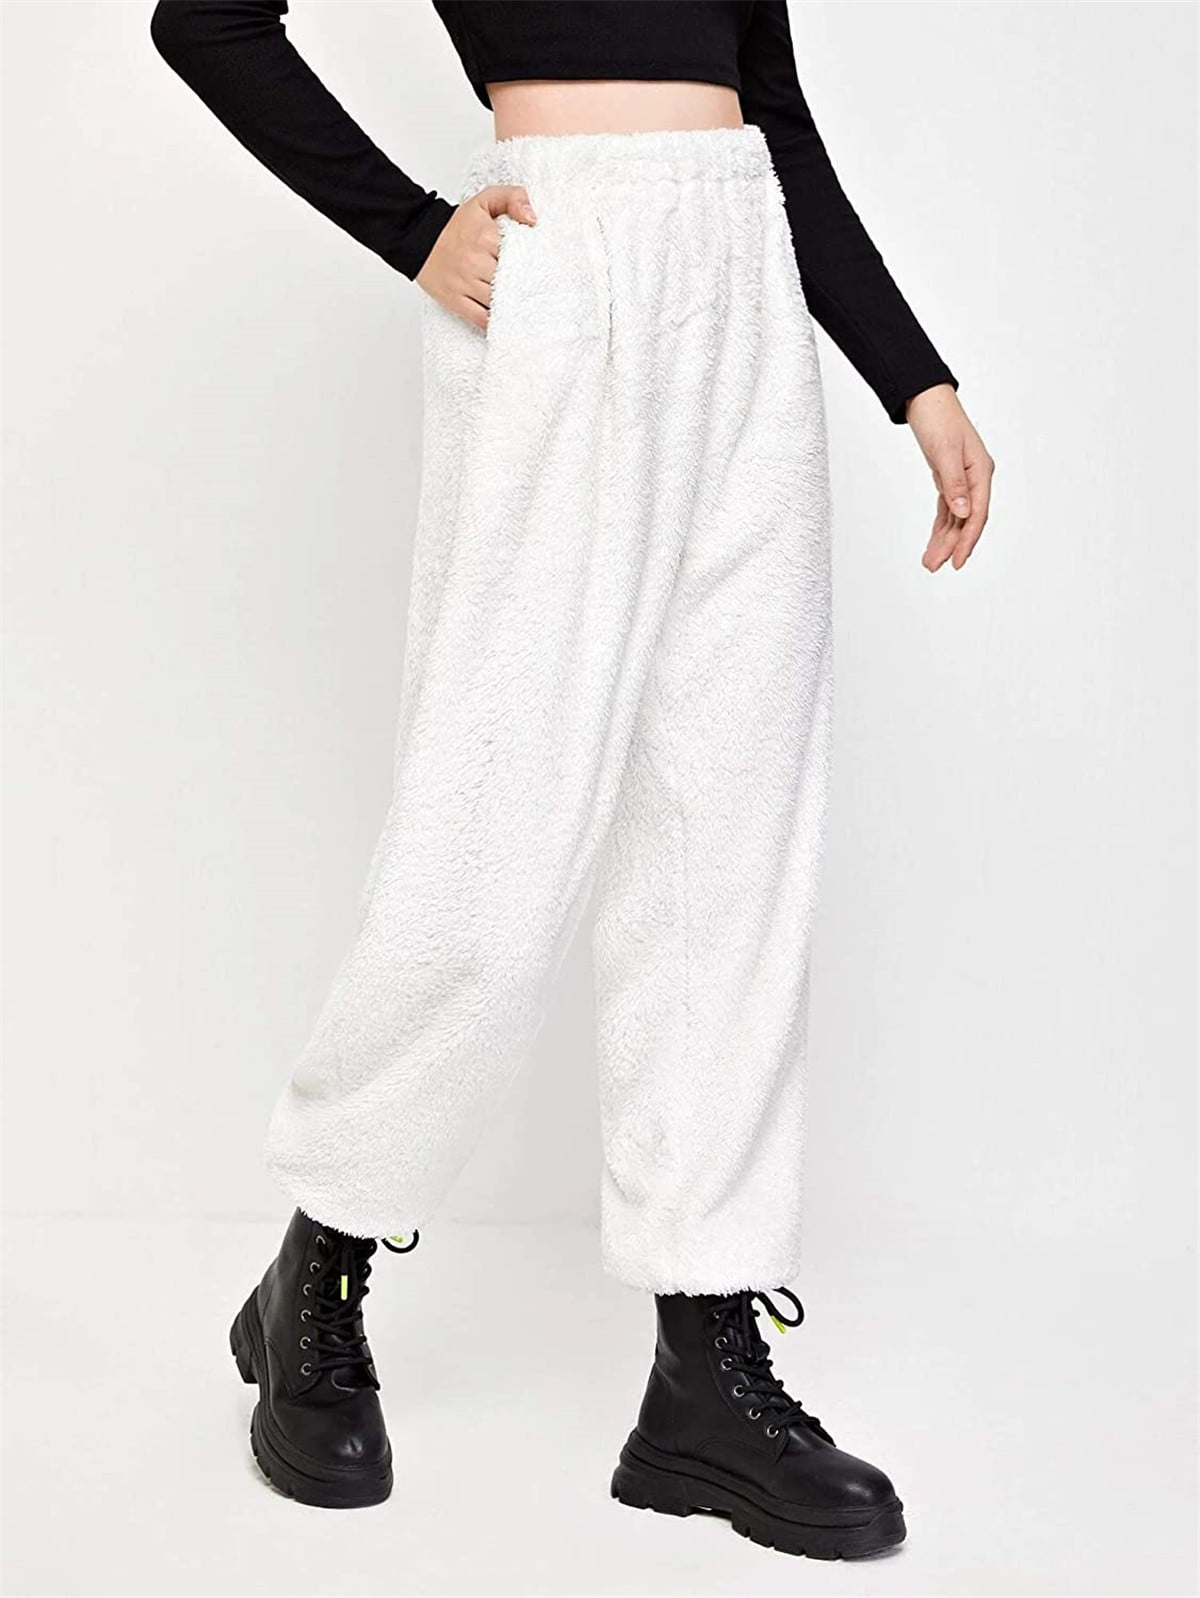 Kiapeise Kiapeise Women's Winter Plush Fluffy Pajama Pants with Pockets  Warm Fleece Lounge Pants Sleepwear Comfy Casual PJ Pants